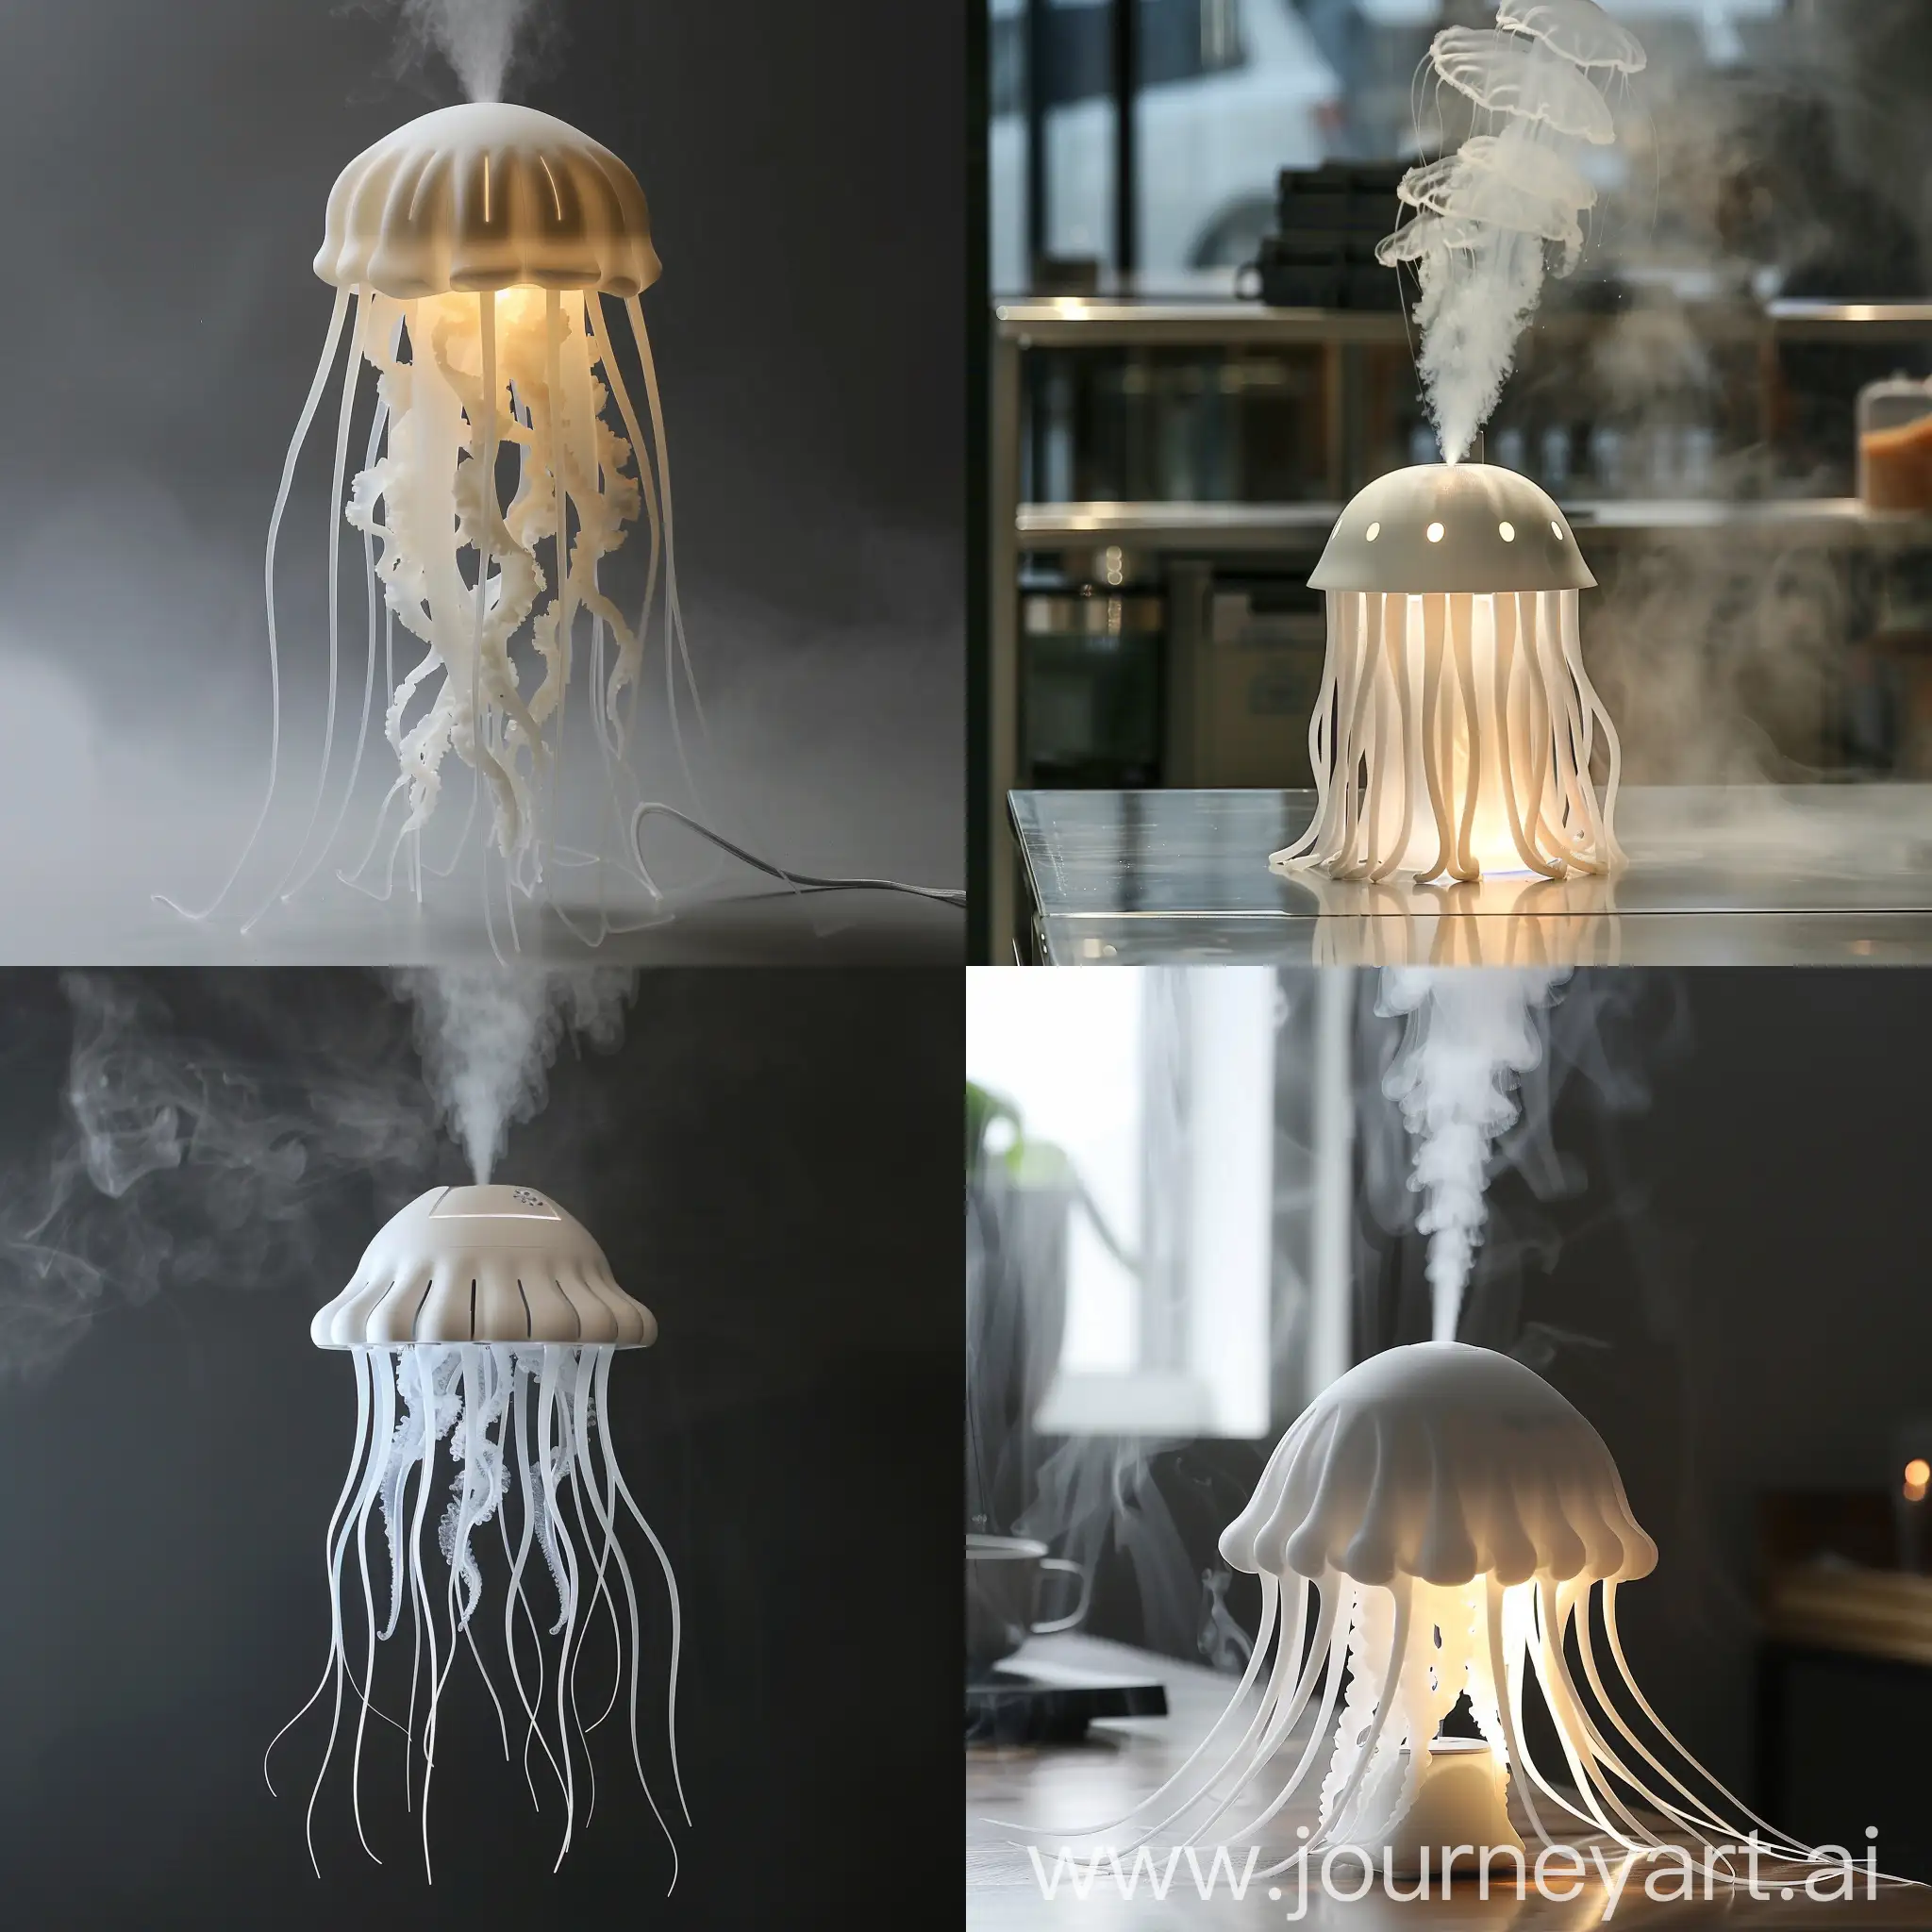 Biomimetic-Jellyfish-Air-Purifier-Innovative-Design-for-Clean-Air